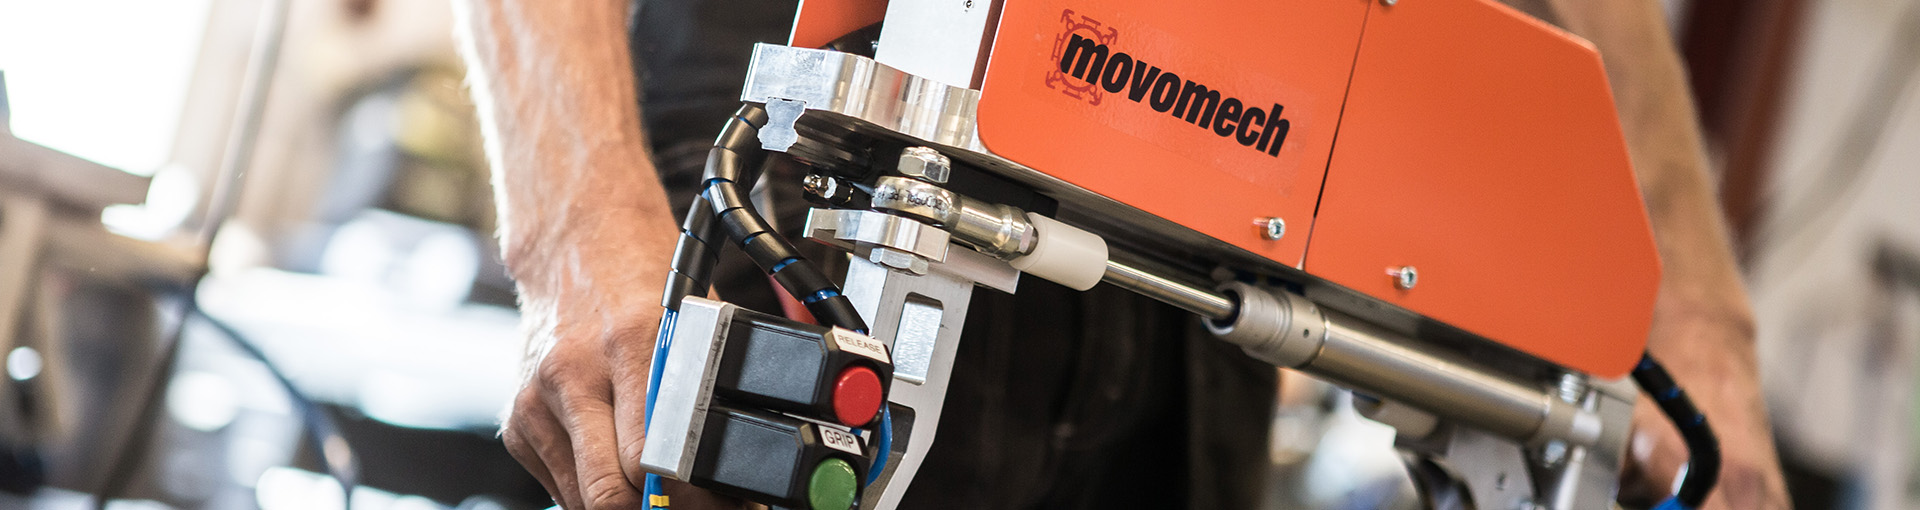 Mechanical gripper tools - Movomech